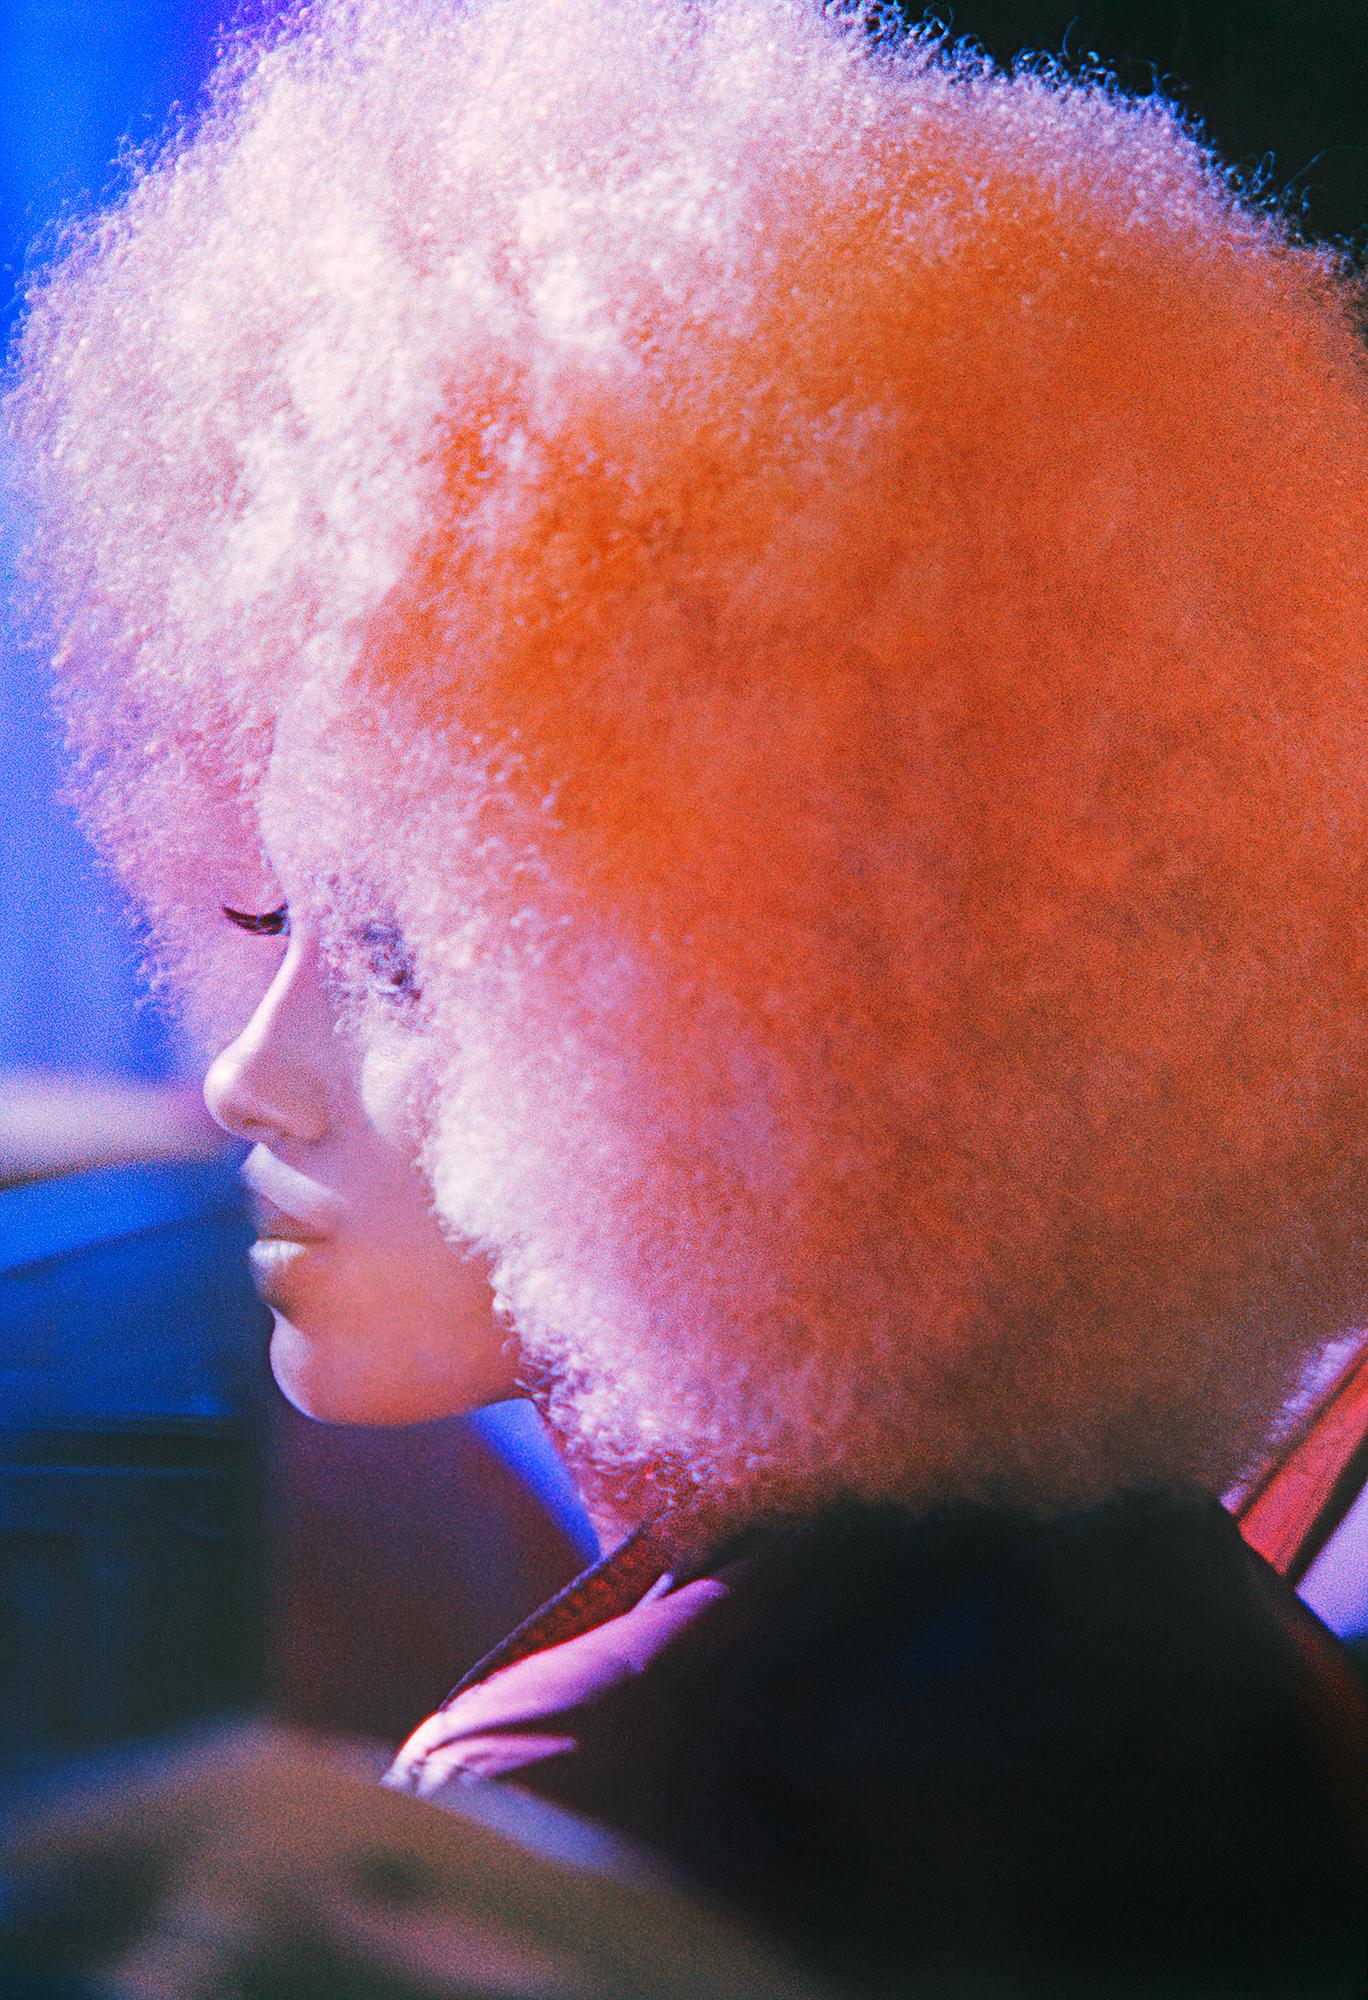 Mitchell Funk Portrait Photograph - Black Hippie with Blond Afro, Washington Square Park - Henri Ghent Black Curator